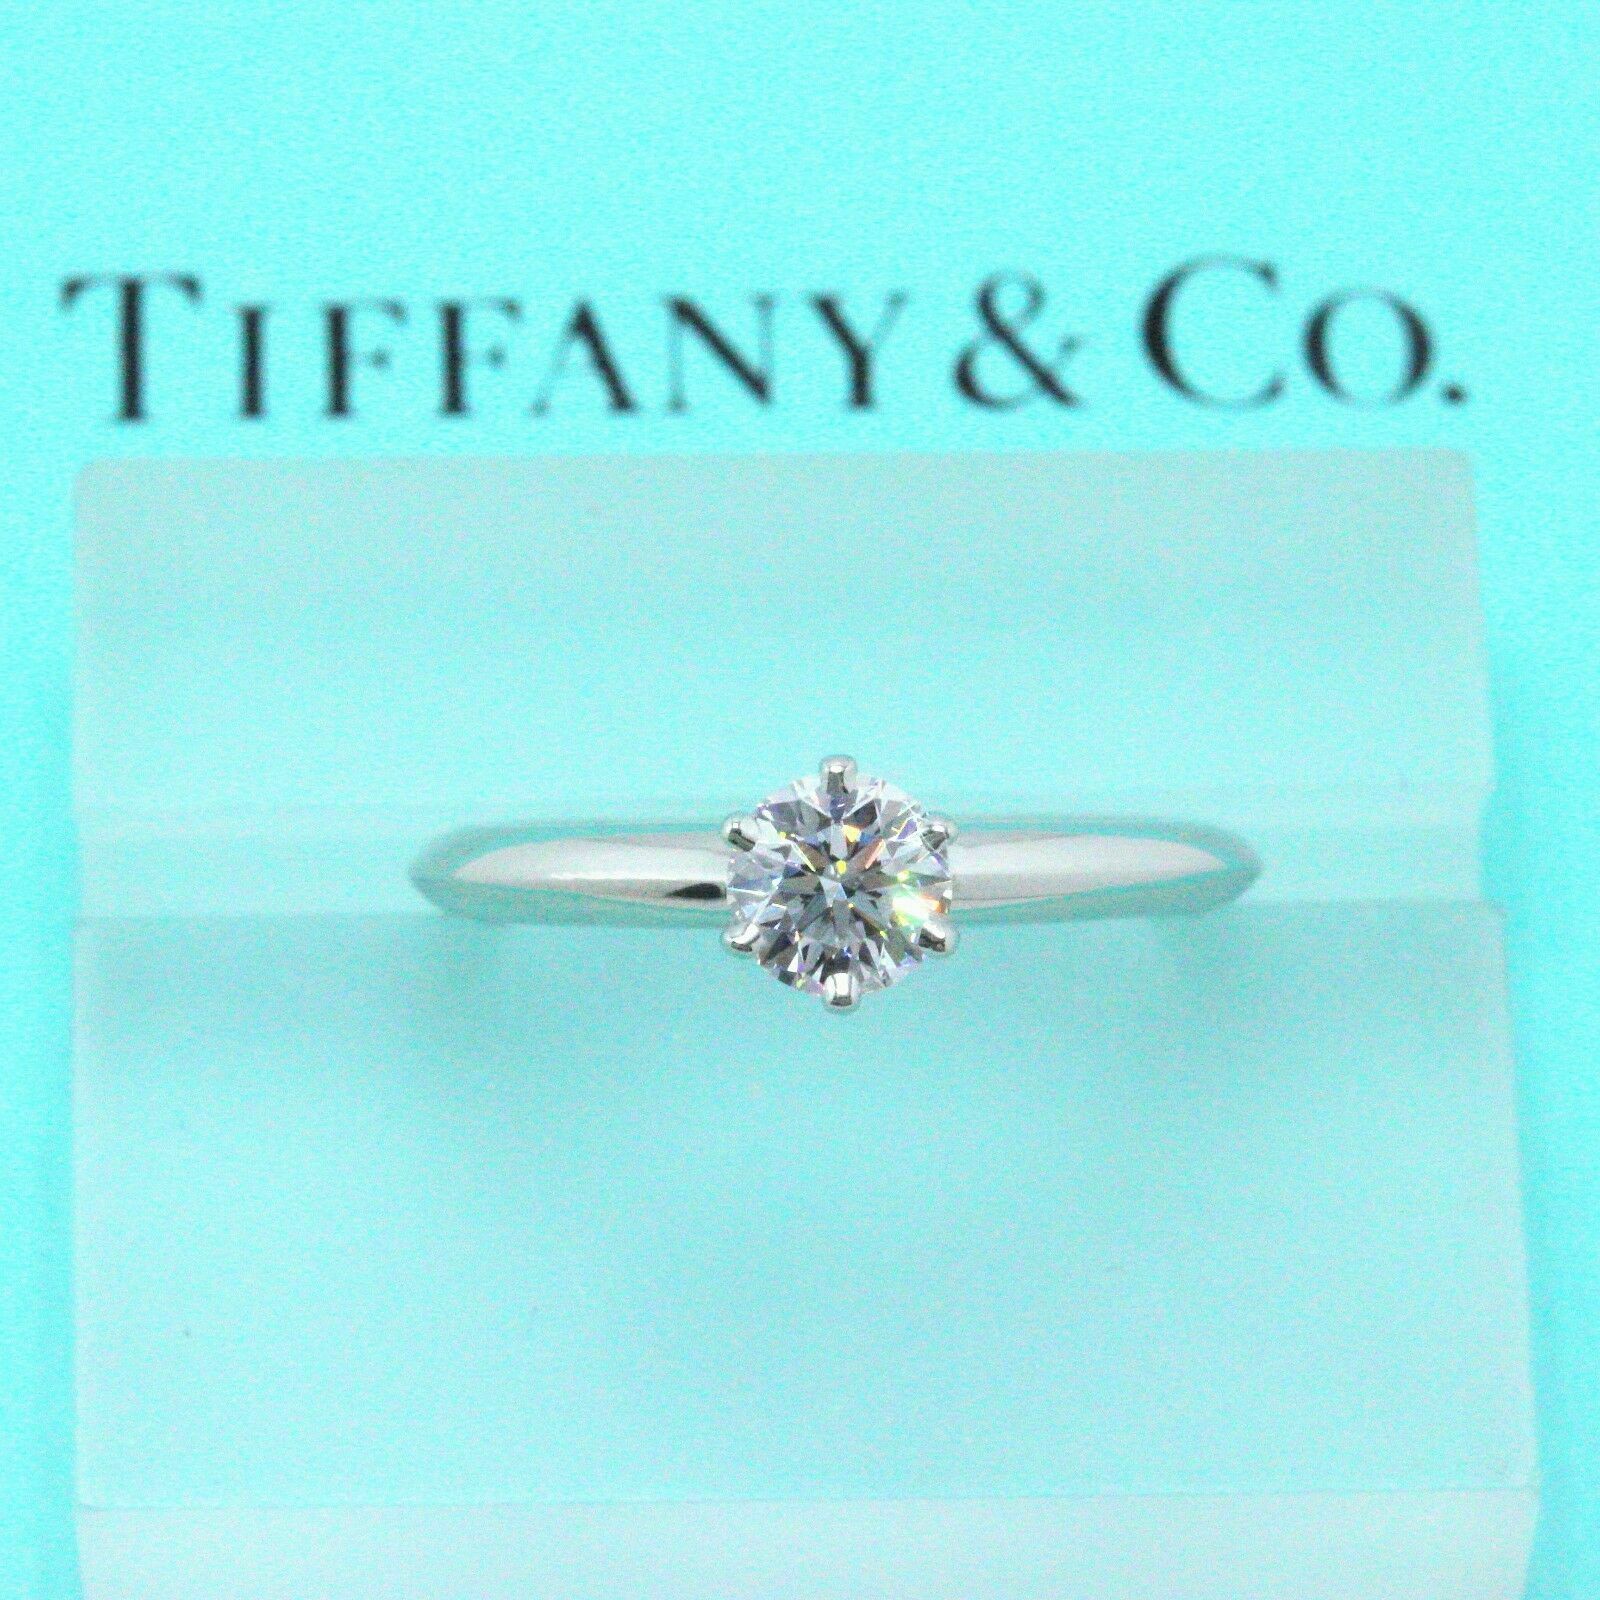 Tiffany & Co Diamond Ring 1.22 Carat - Buy Diamond Rings and Diamonds